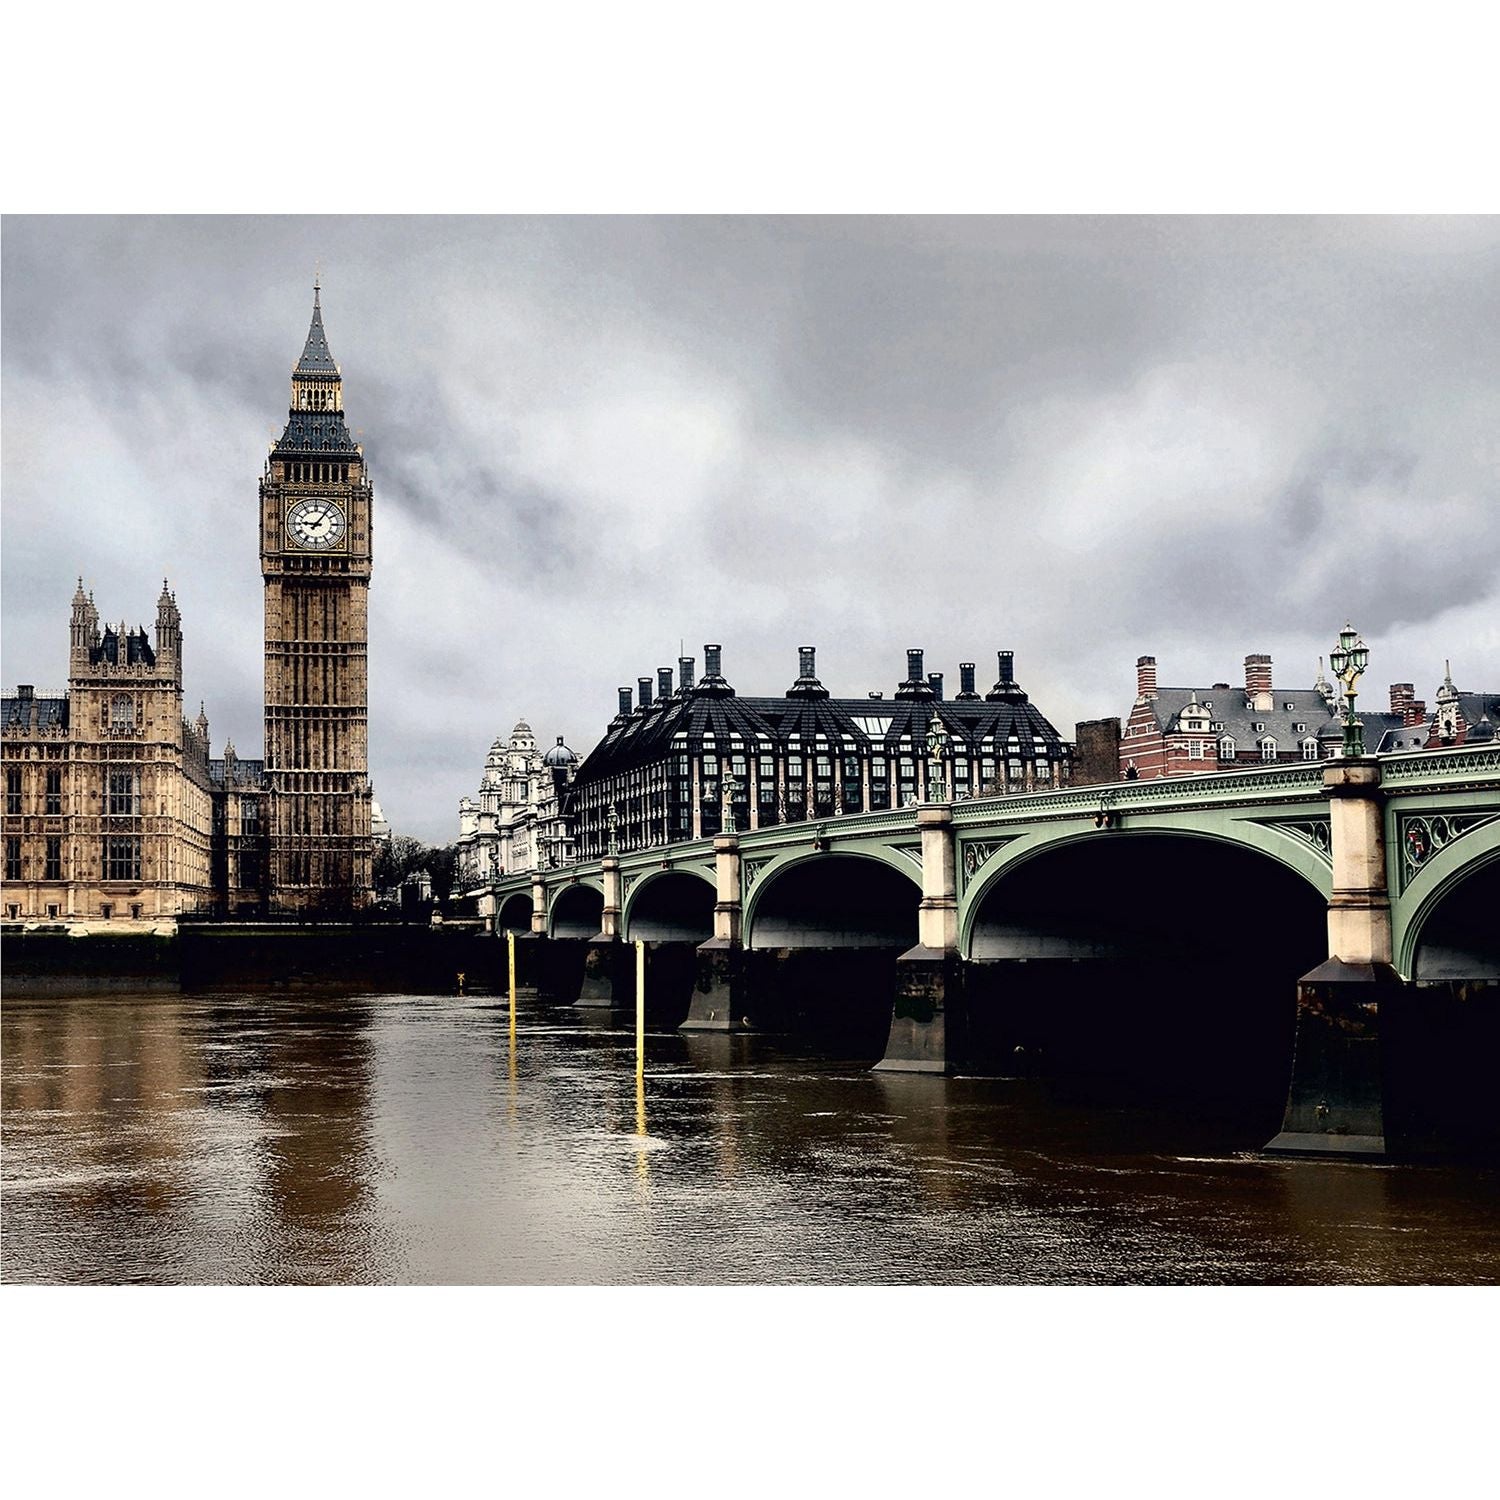 Iconic London: Big Ben, Water, and Bridge Wall Mural